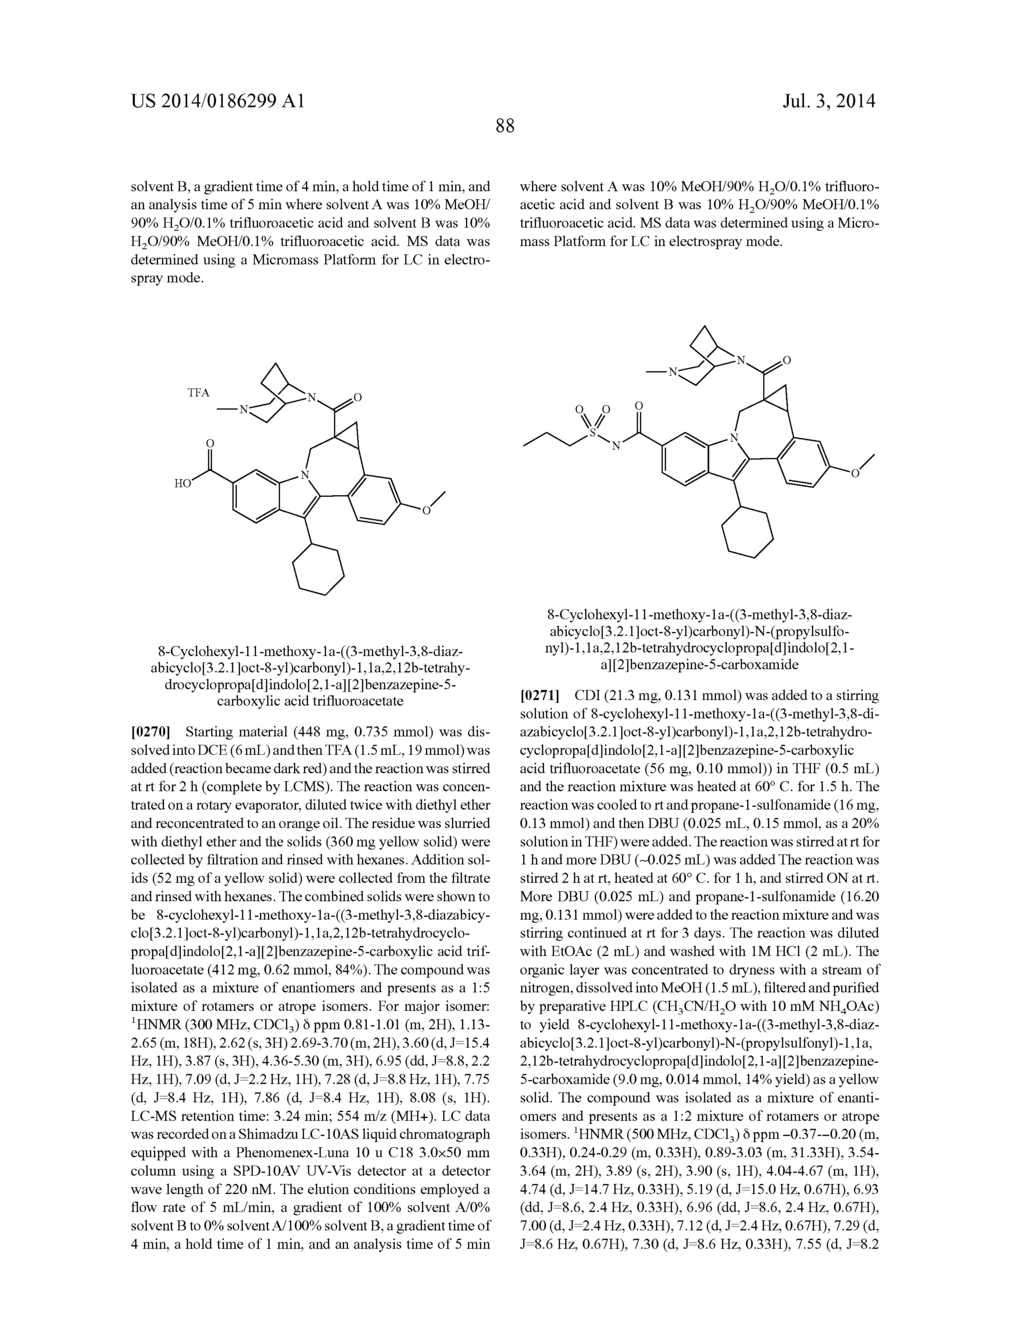 Cyclopropyl Fused Indolobenzazepine HCV NS5B Inhibitors - diagram, schematic, and image 89